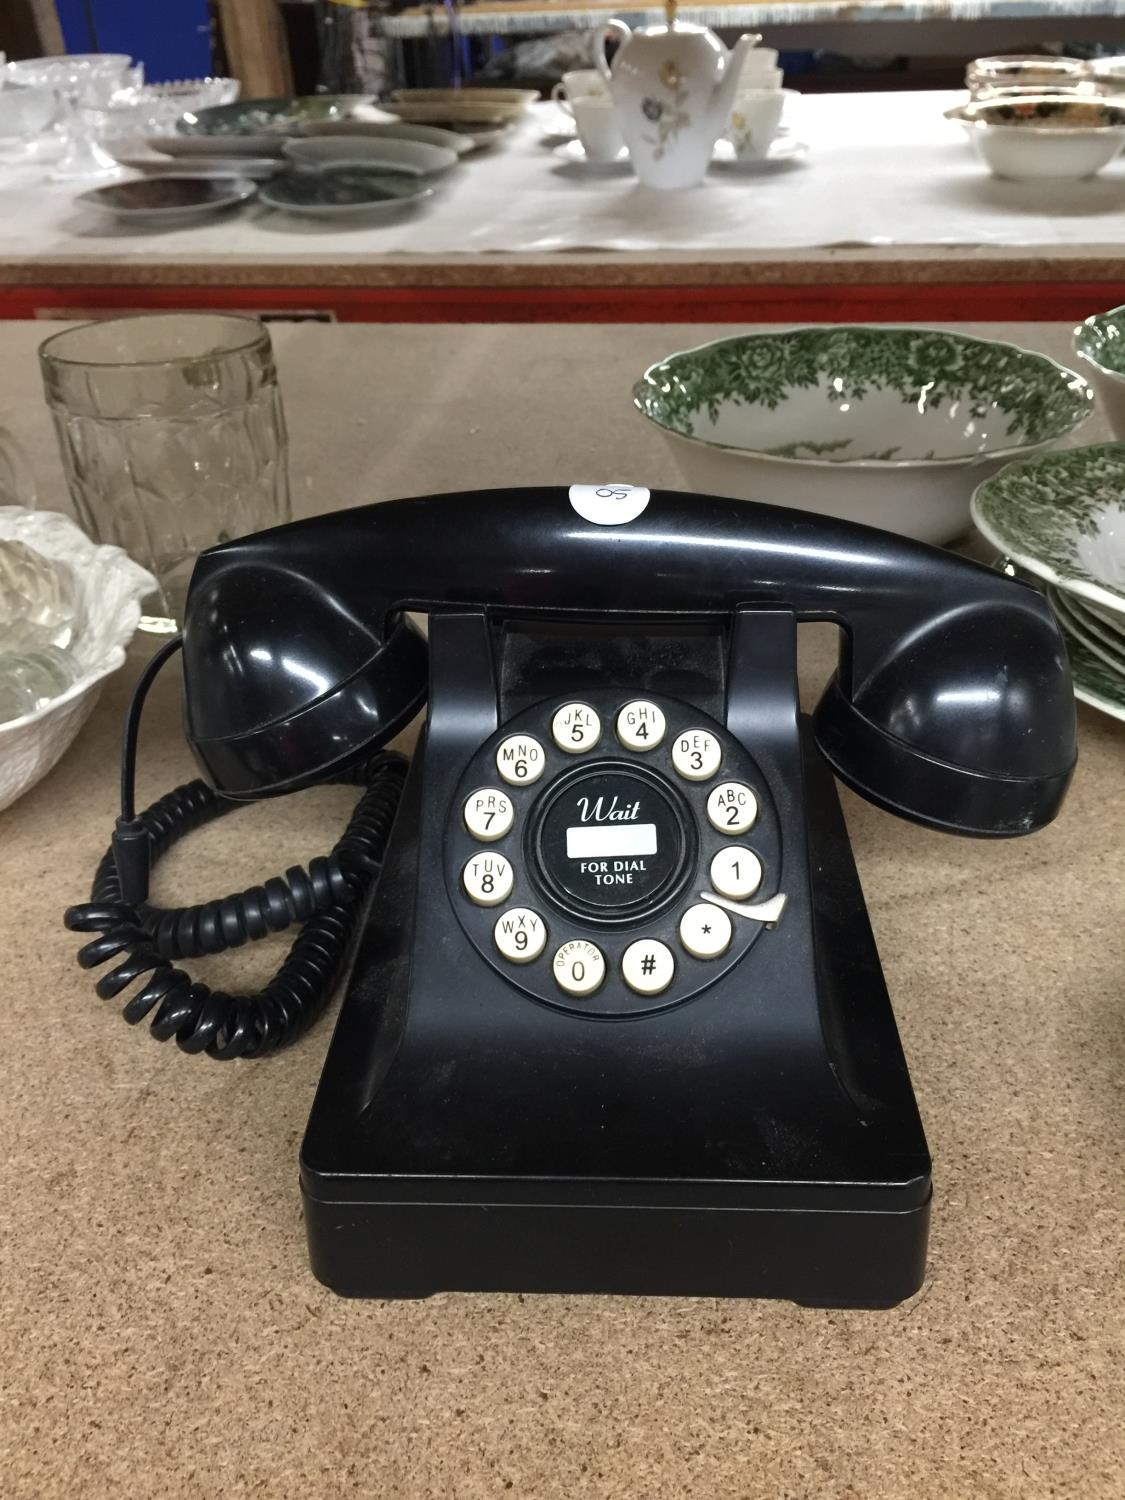 A VINTAGE STYLE BLACK PUSH BUTTON TELEPHONE